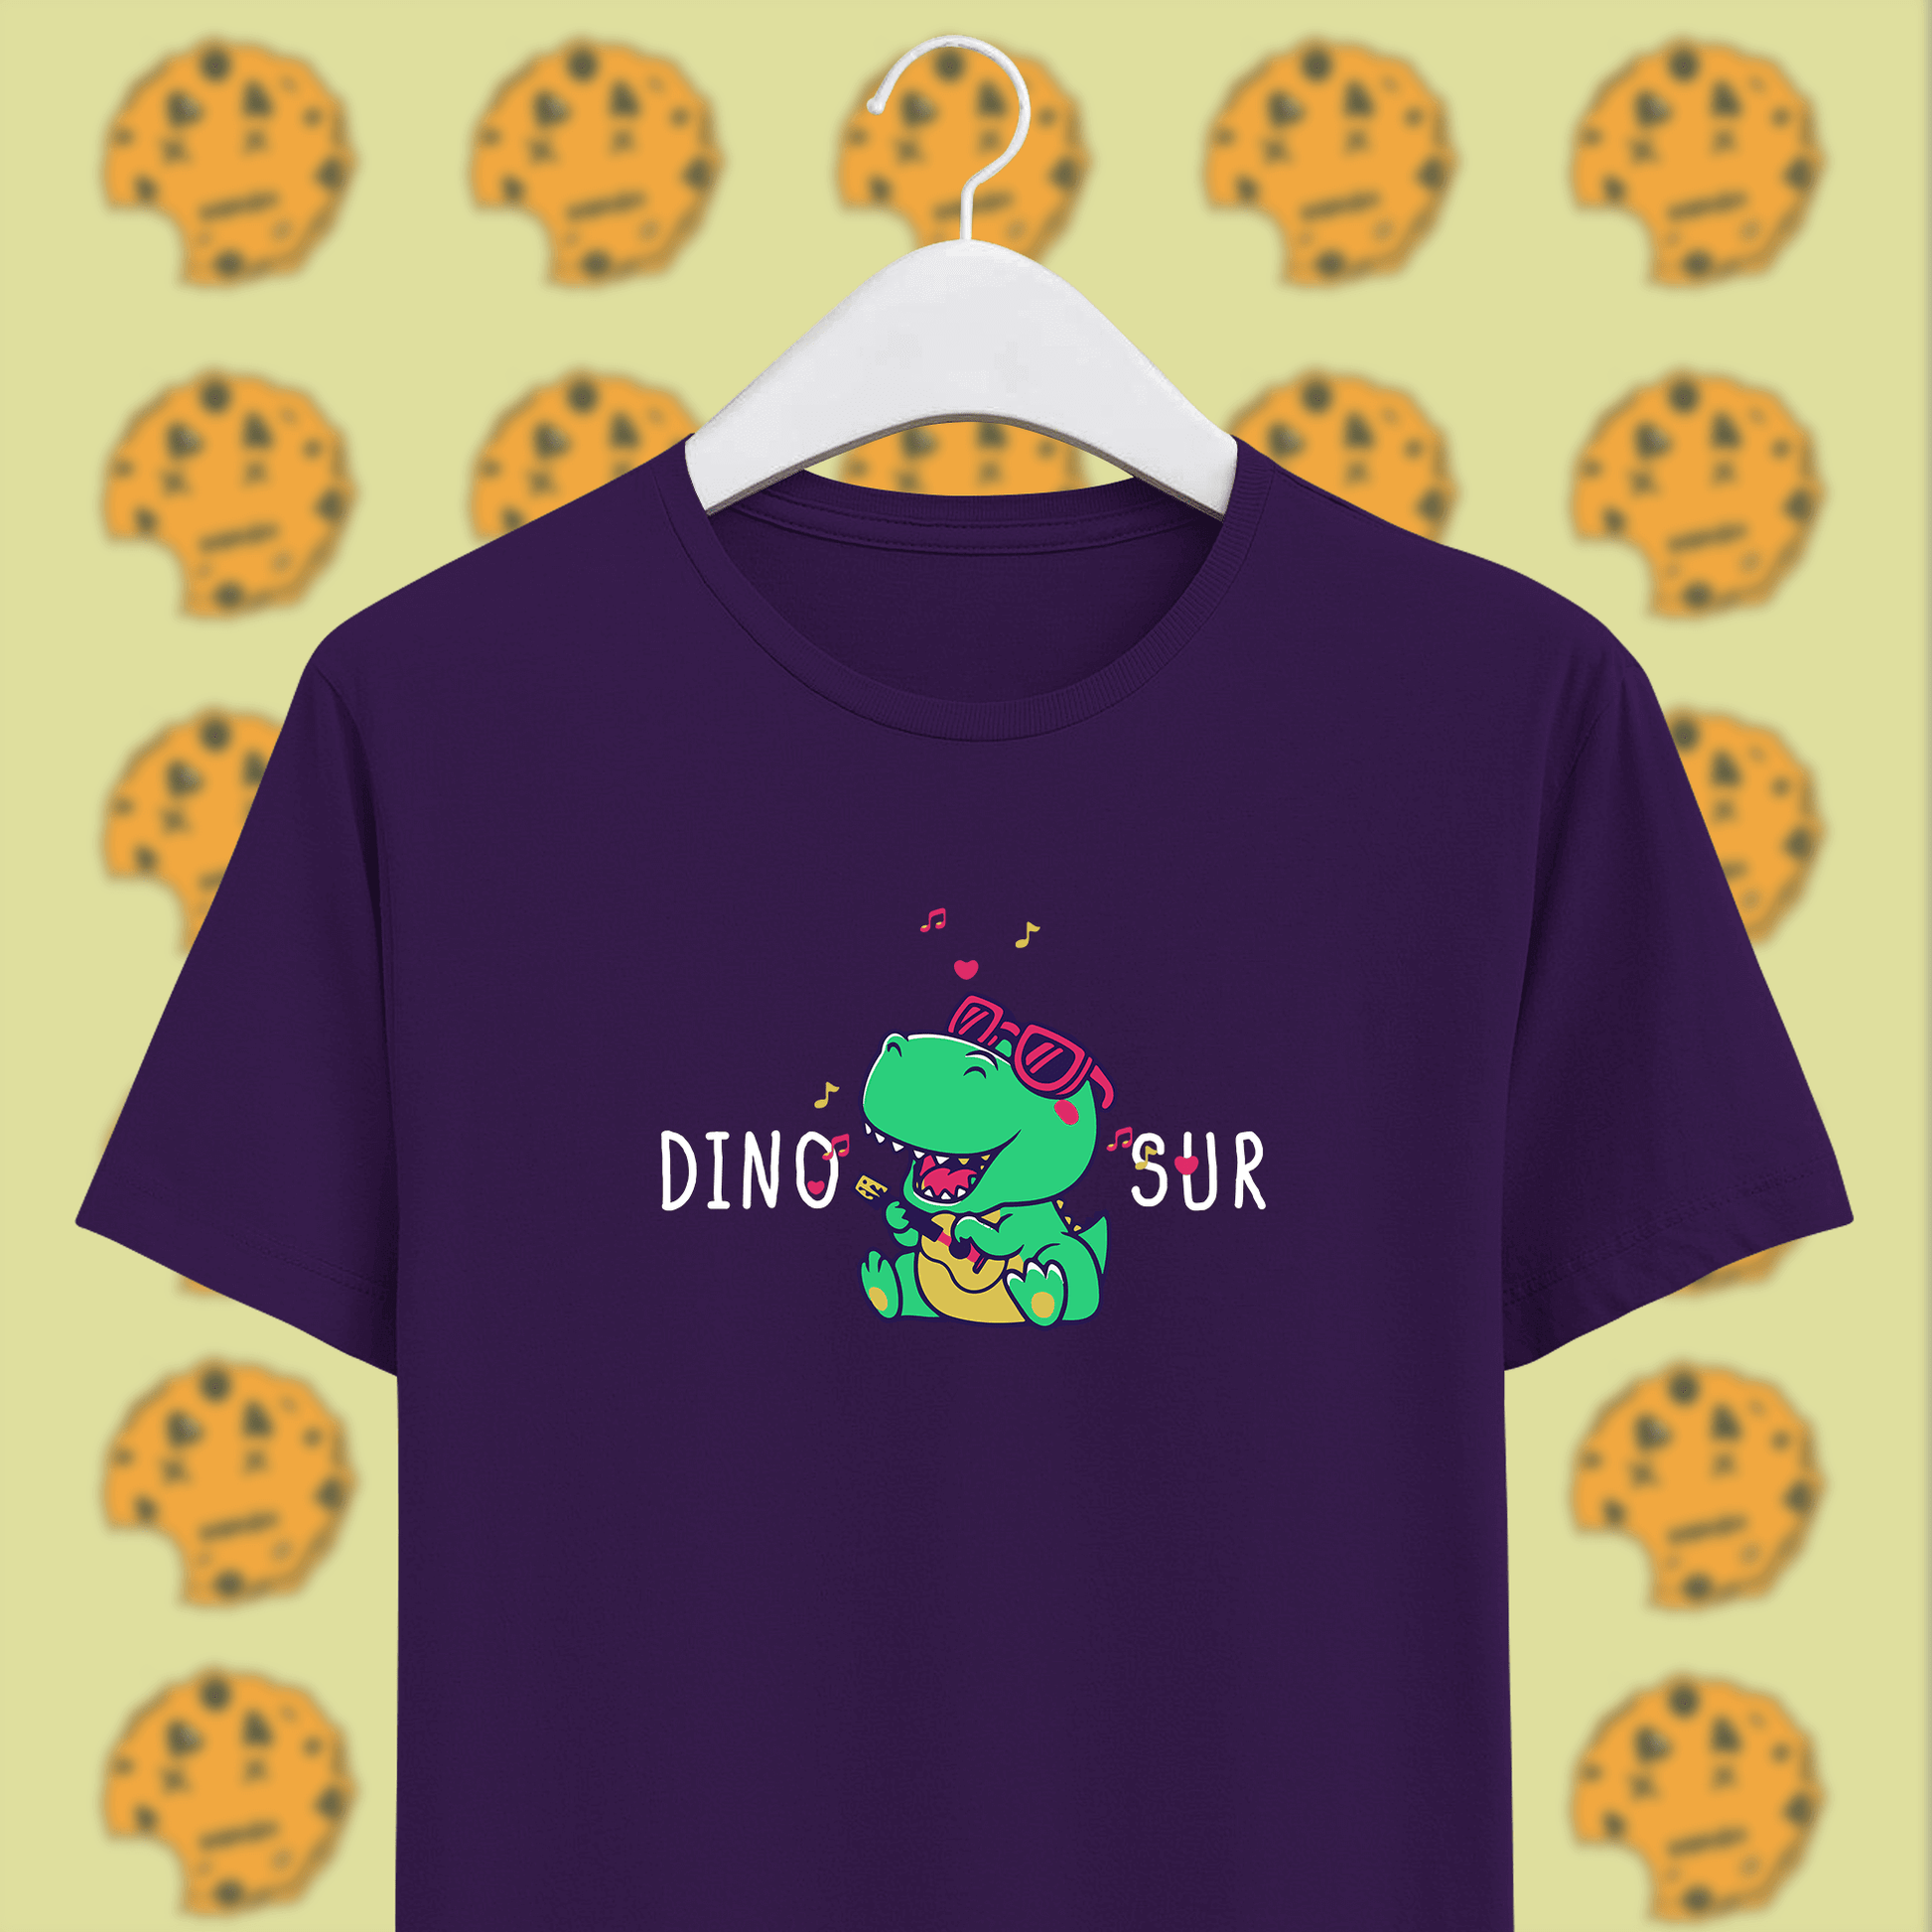 singing dinosaur on purple unisex cotton t-shirt, funny pun 